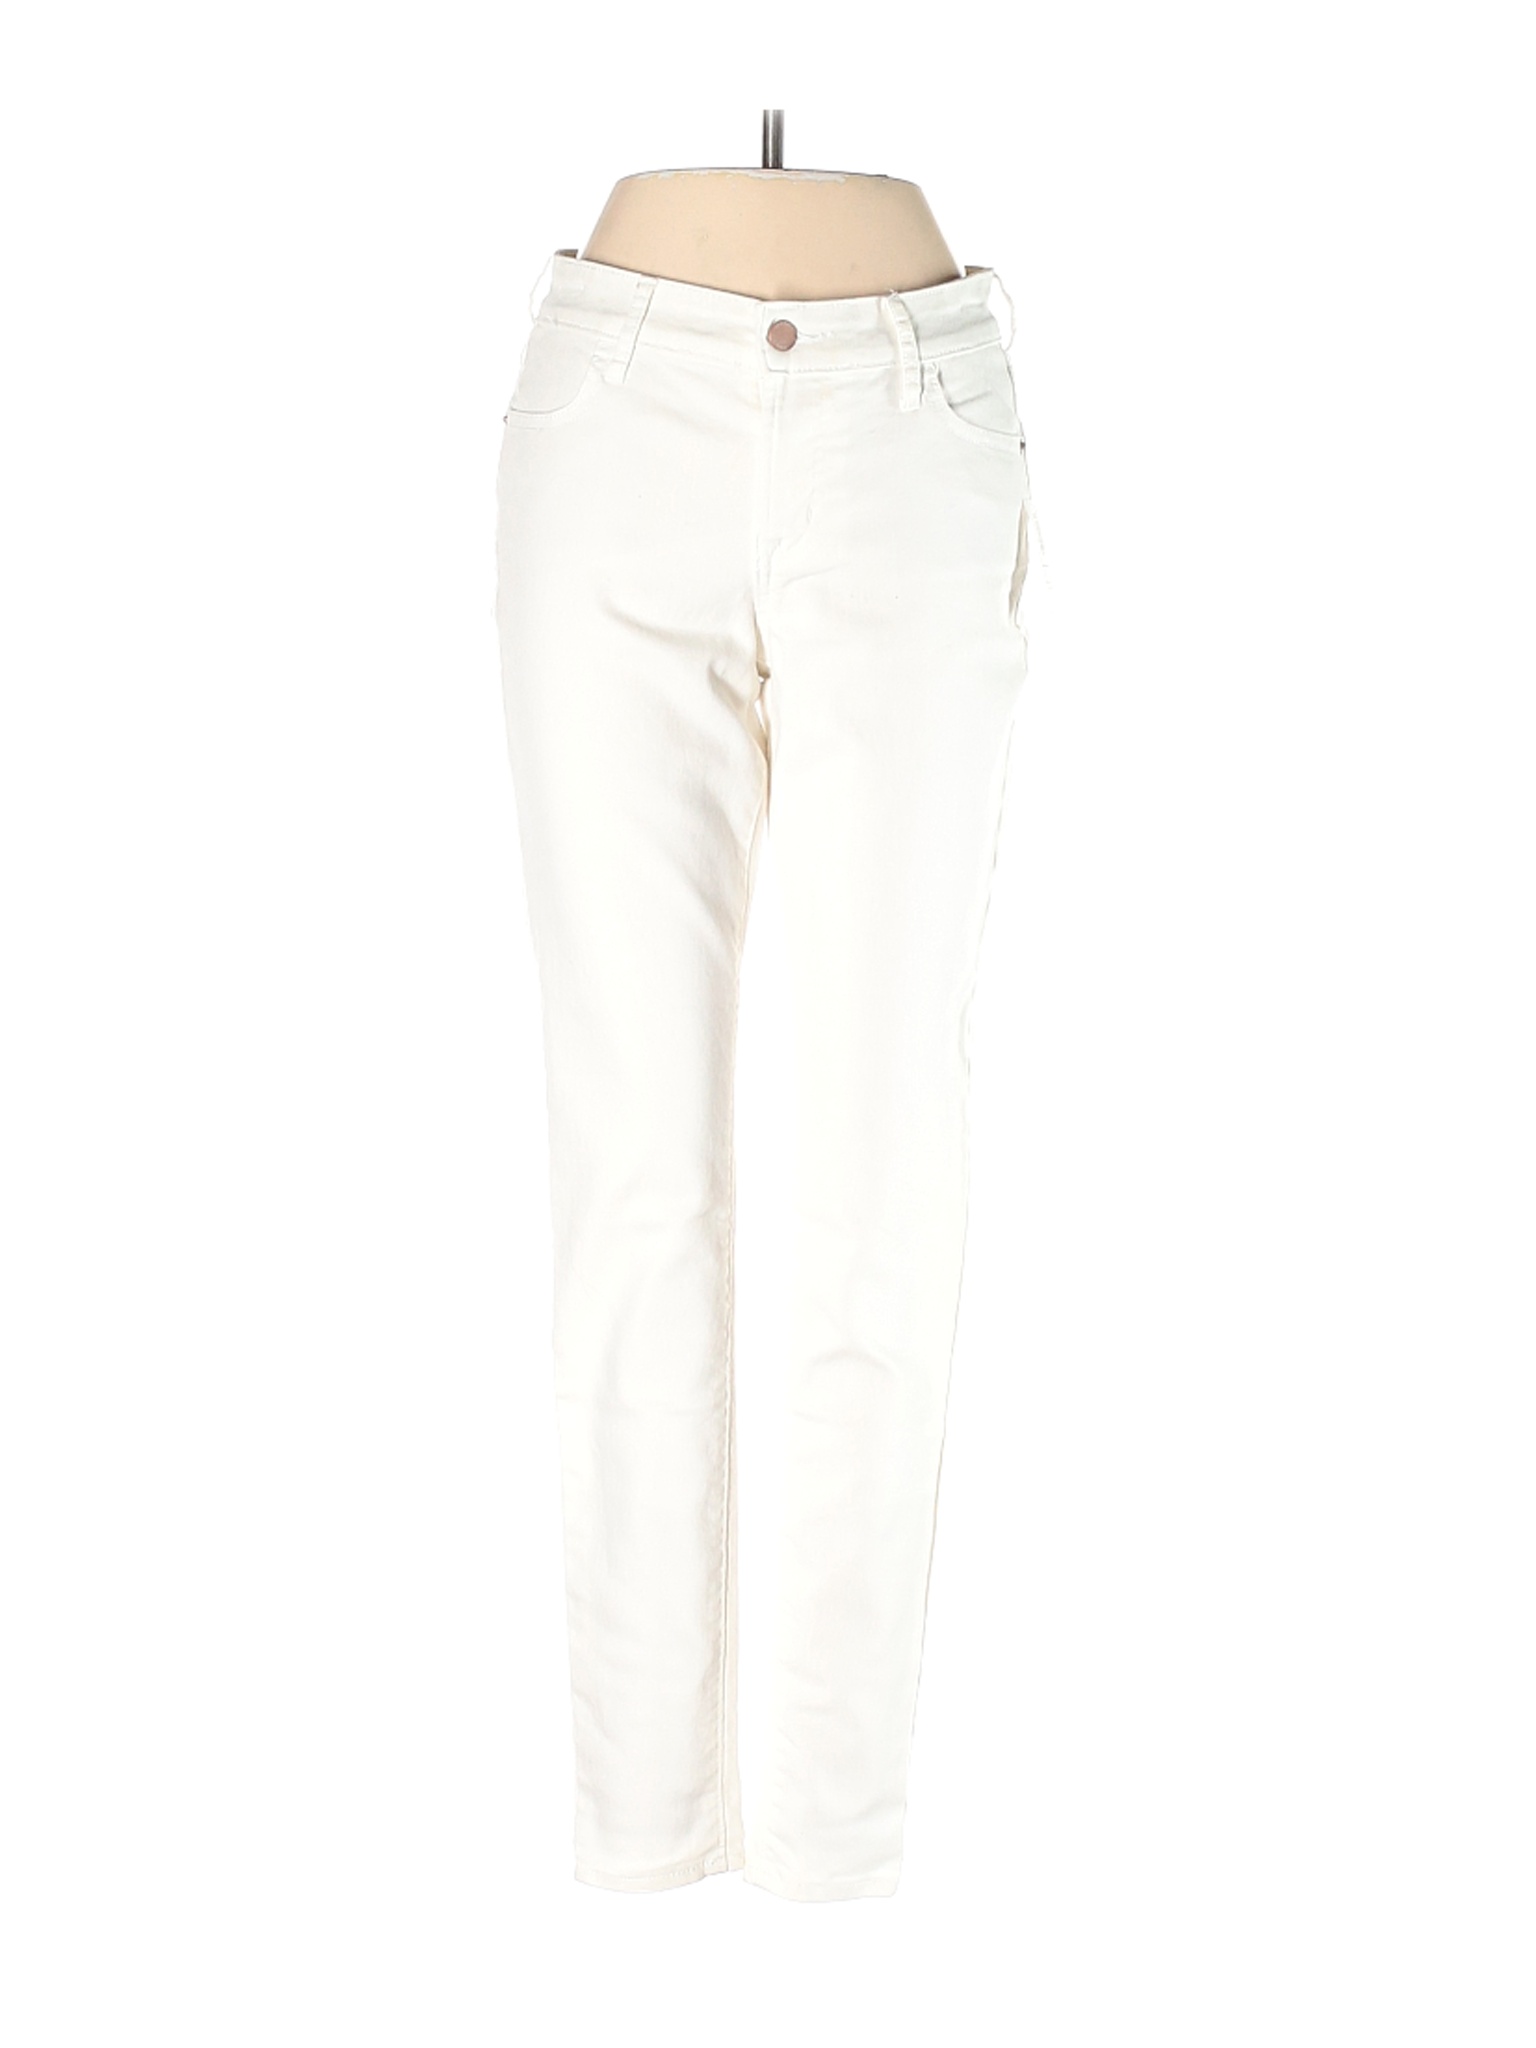 NWT Old Navy Women White Jeans 2 | eBay